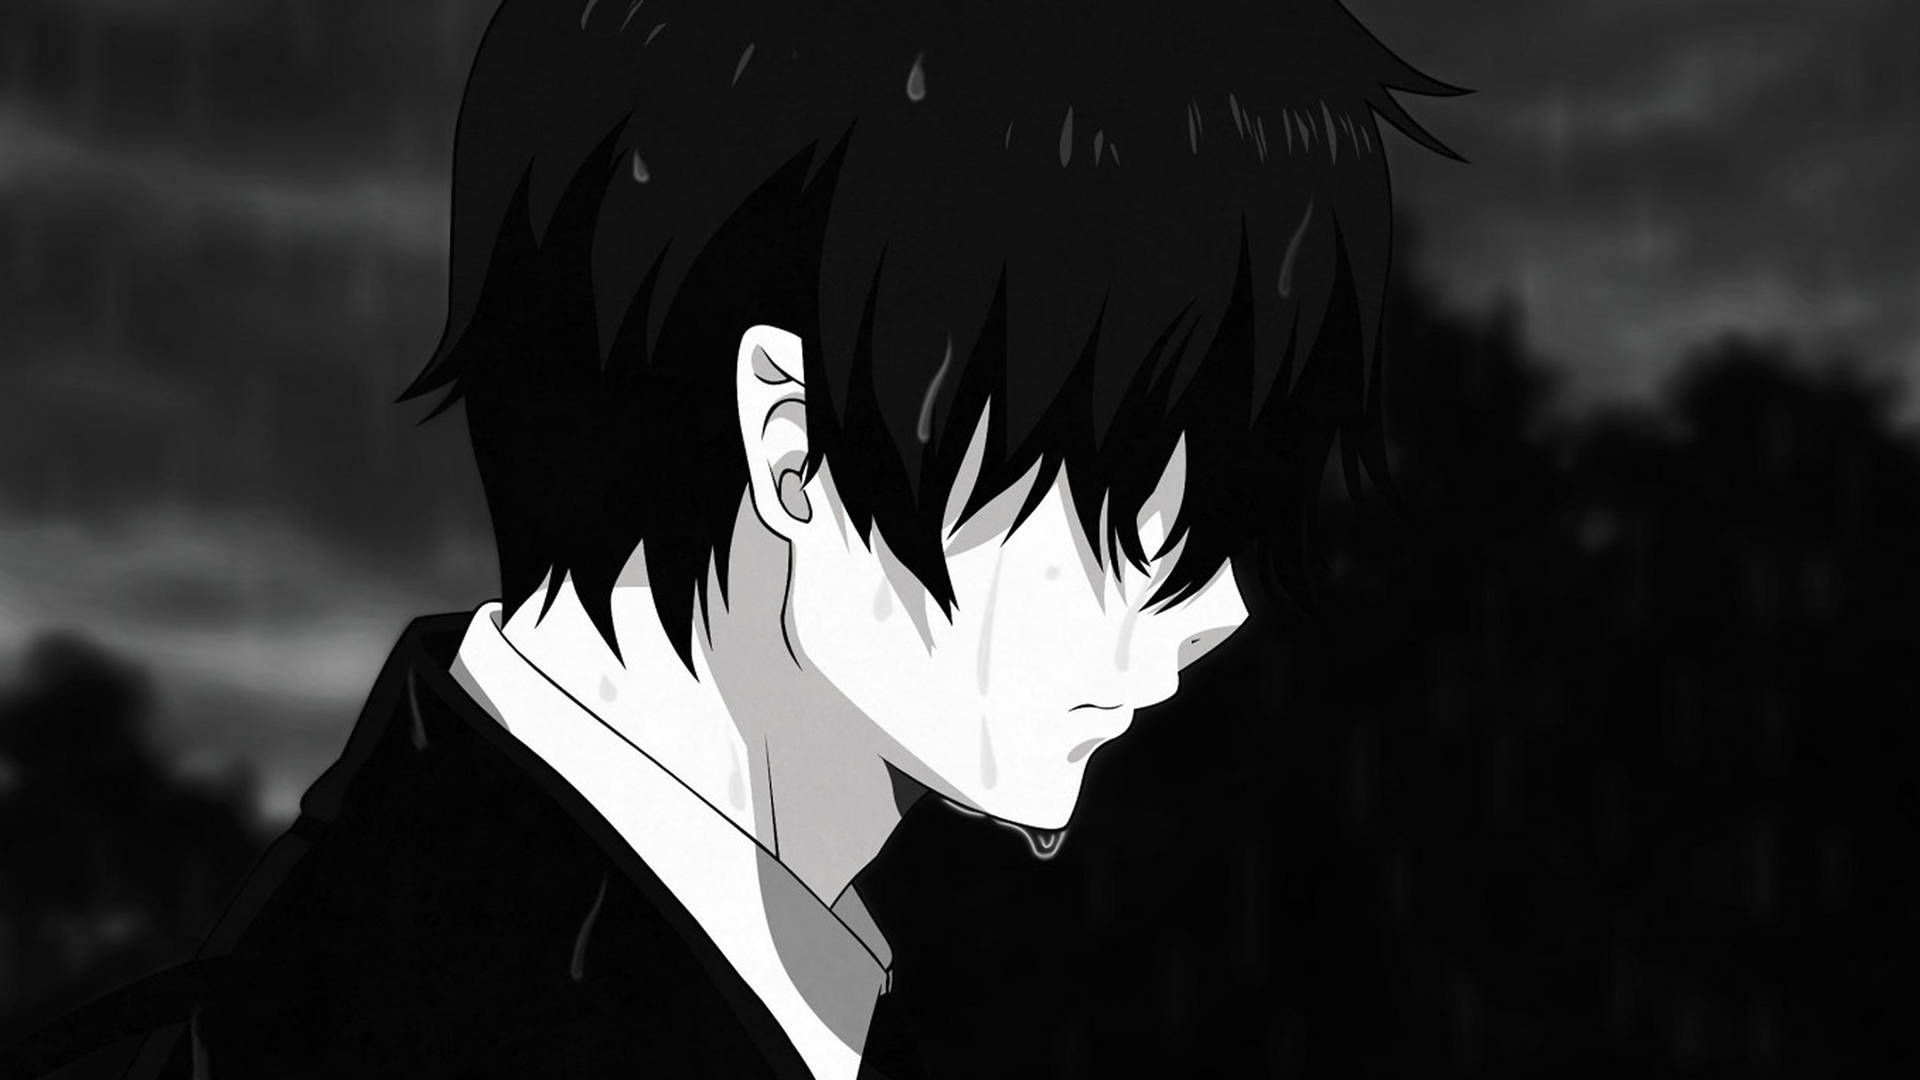 Sad Anime 4k Man Crying In The Rain Background